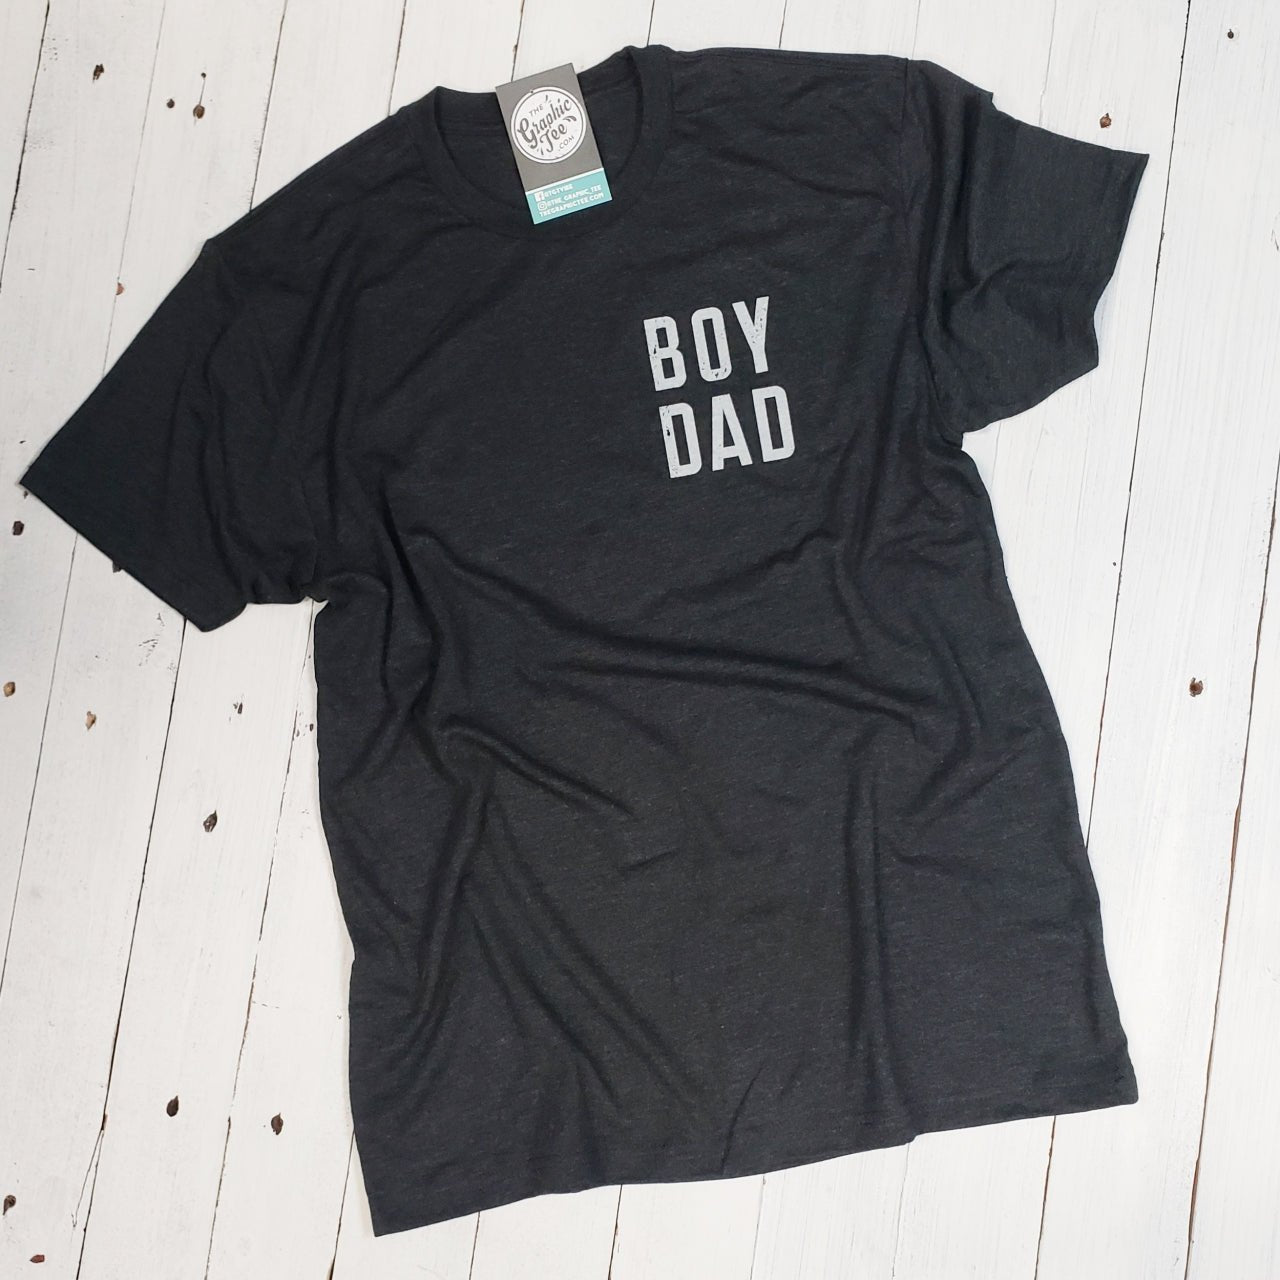 Boy Dad - Adult Tee - The Graphic Tee